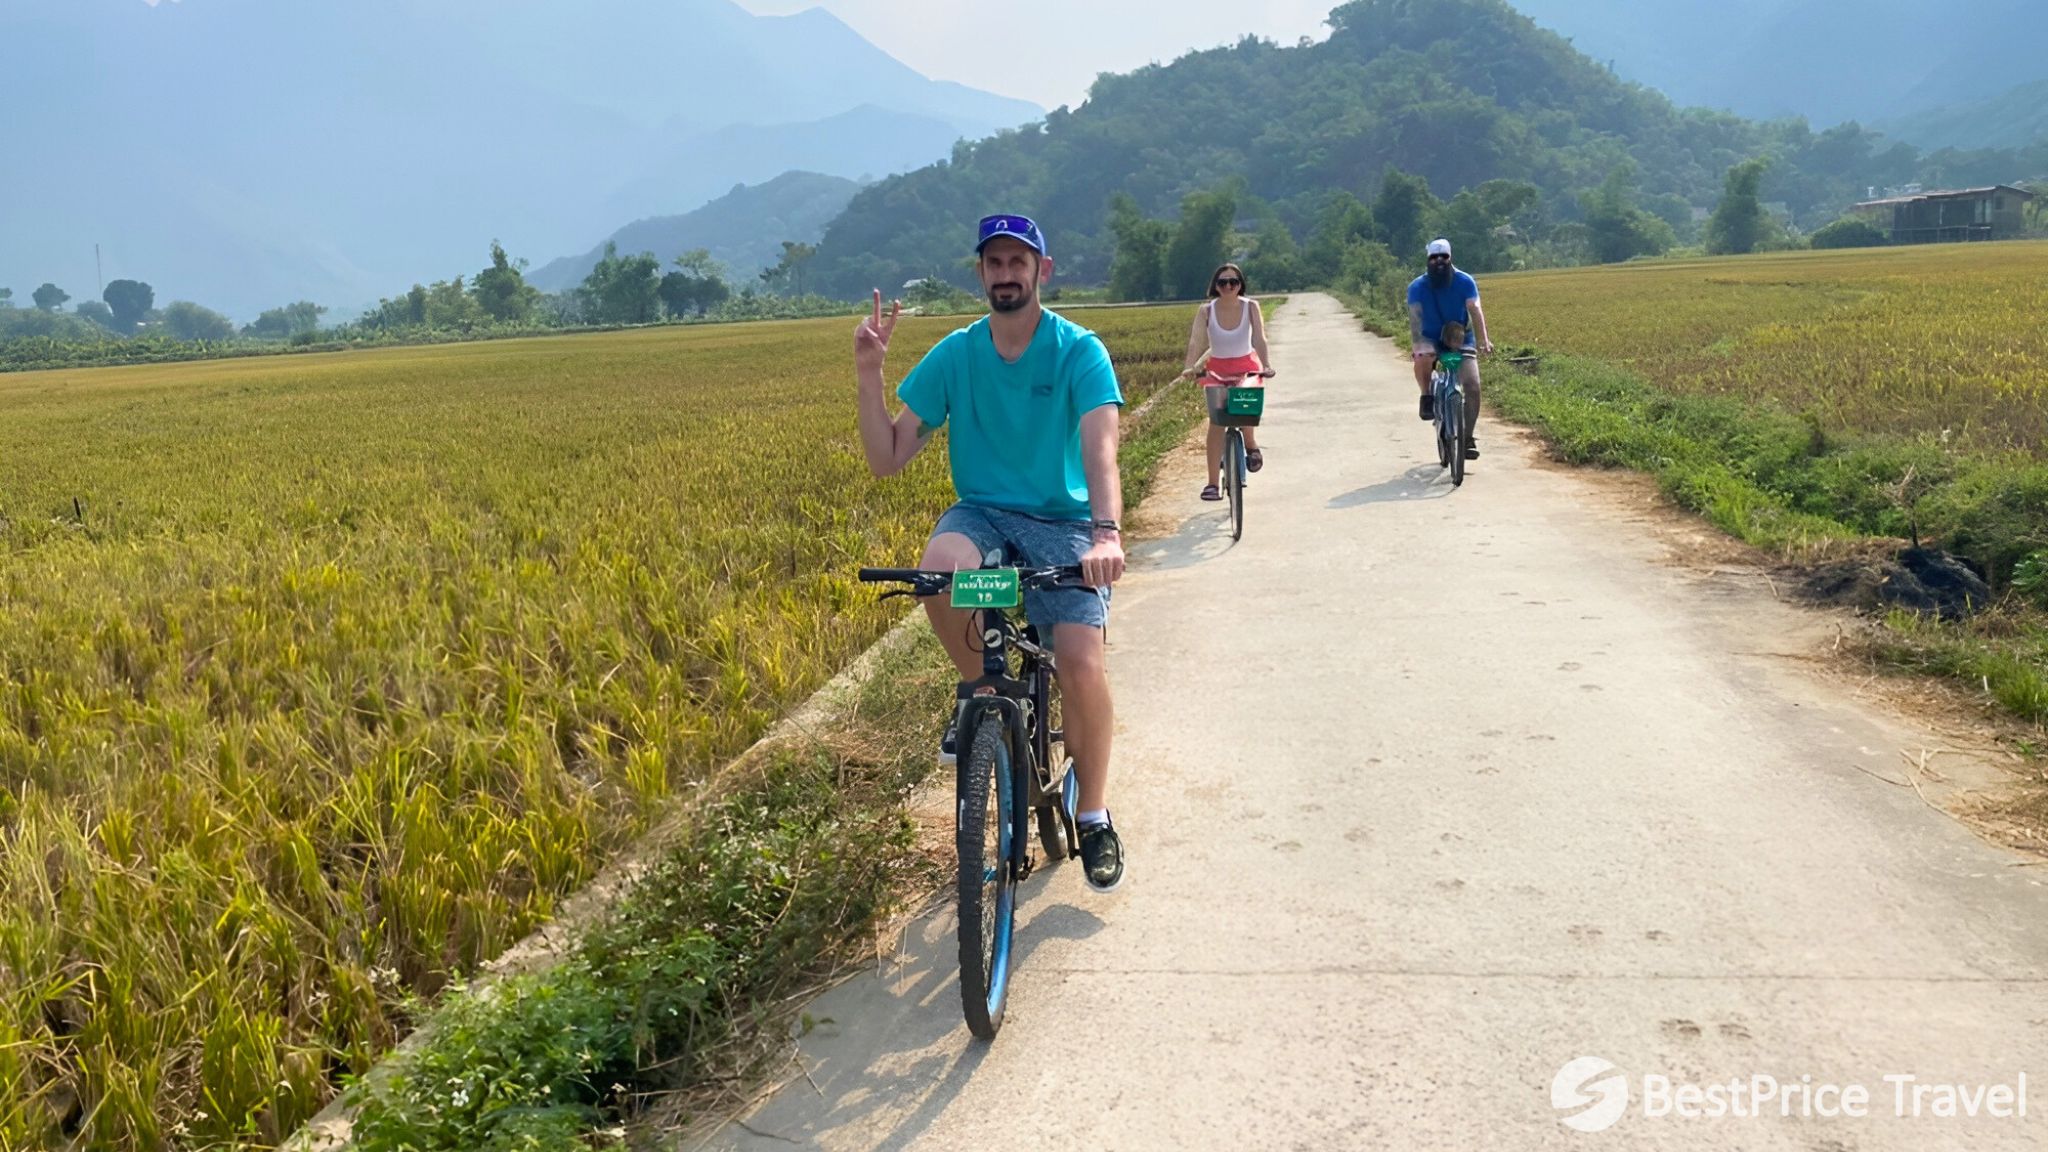 Day 2 Ride A Bike To Discover Mai Chau